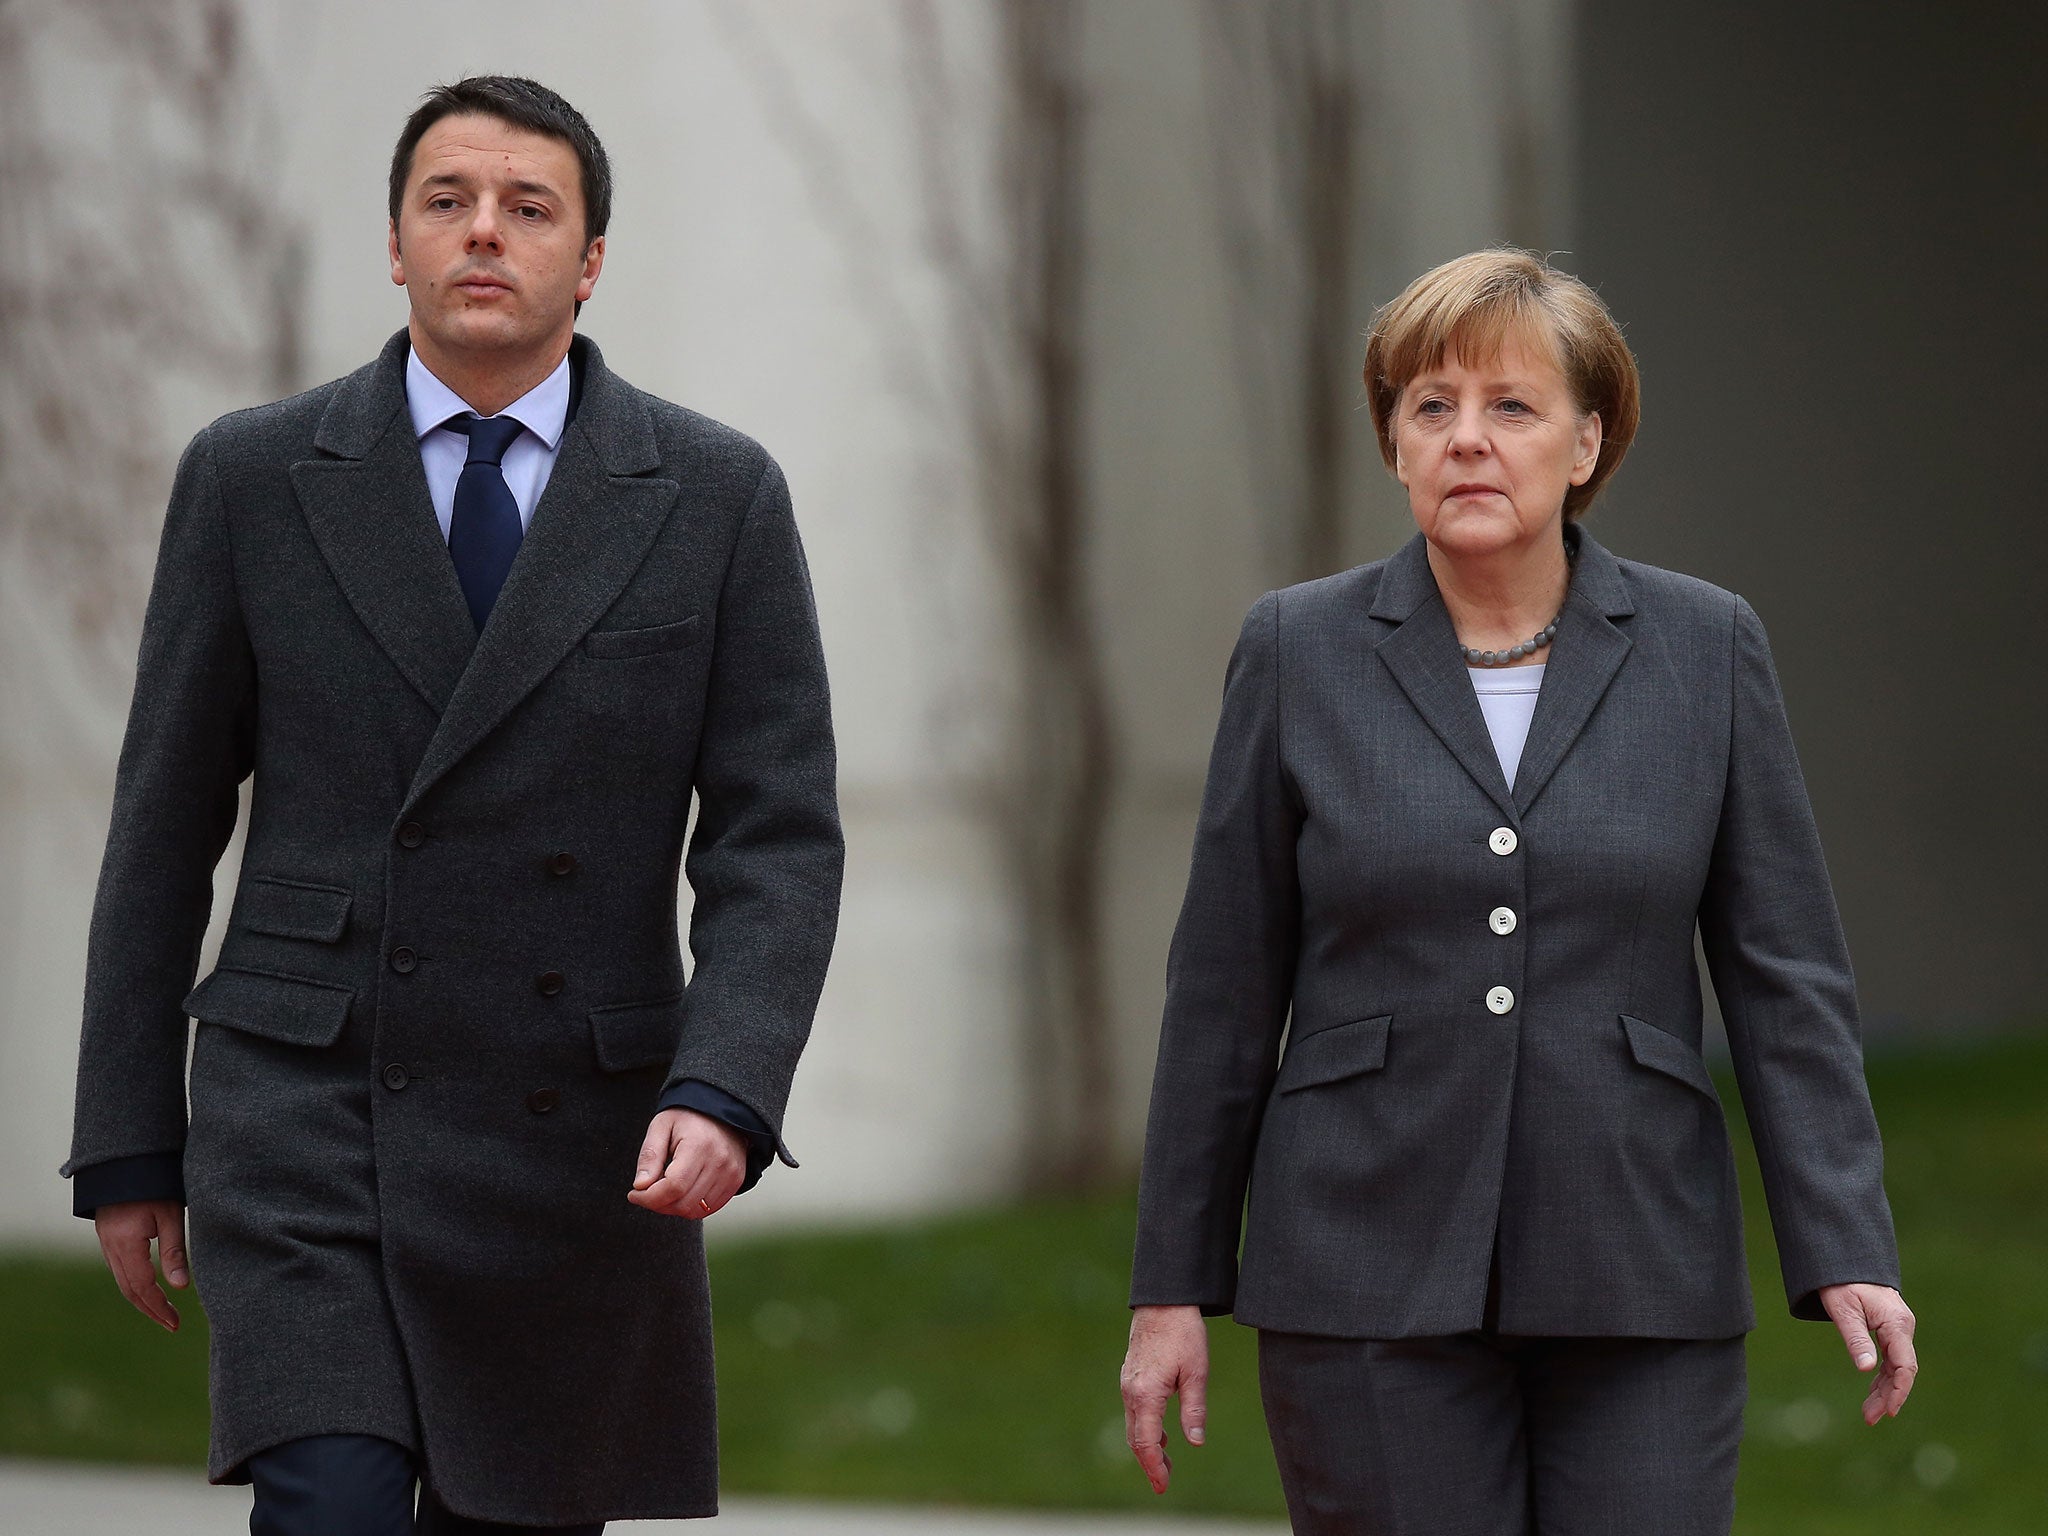 Matteo Renzi and Angela Merkel find themselves at loggerheads